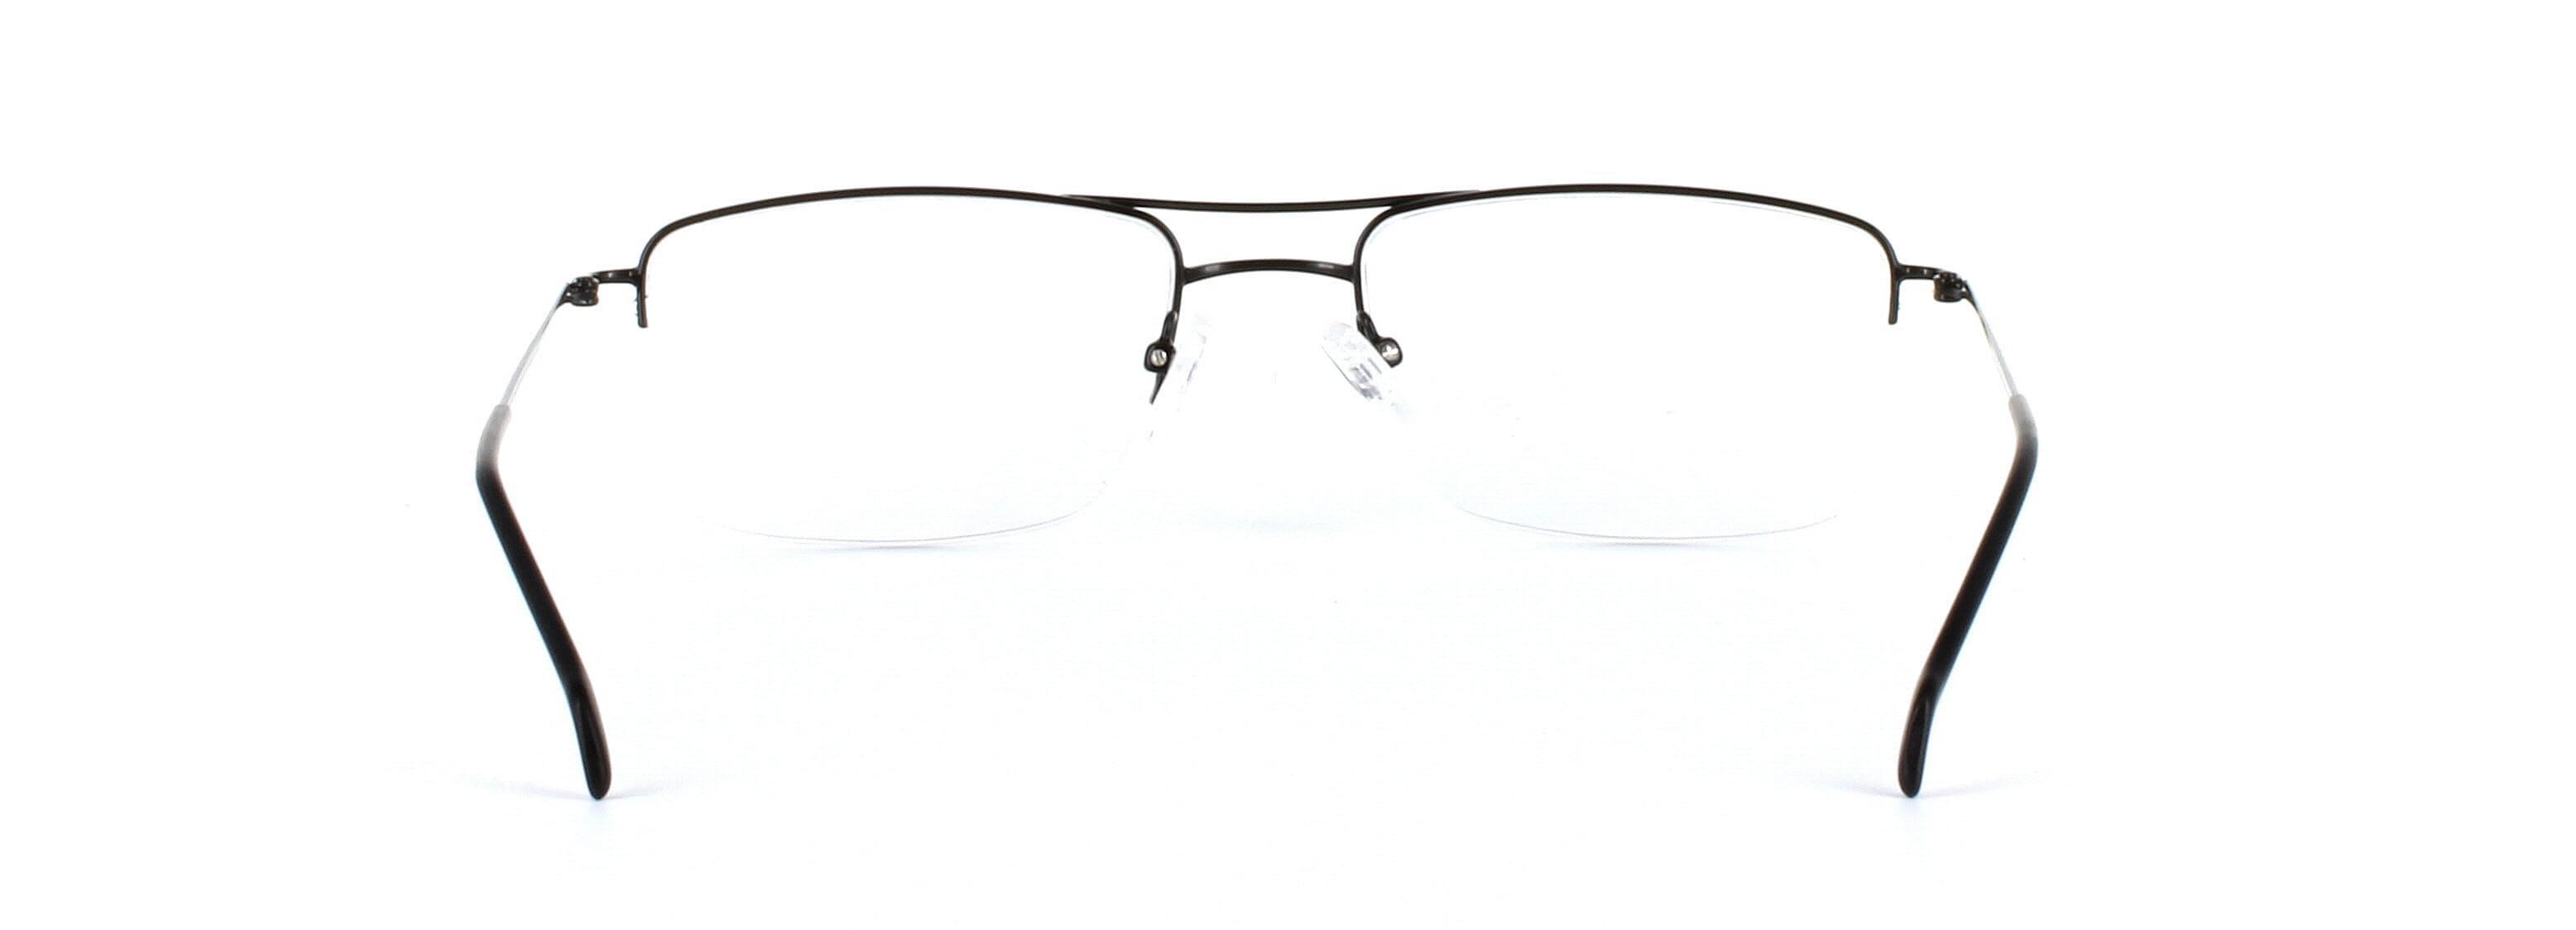 Oklahoma Black Semi Rimless Metal Glasses - Image View 3